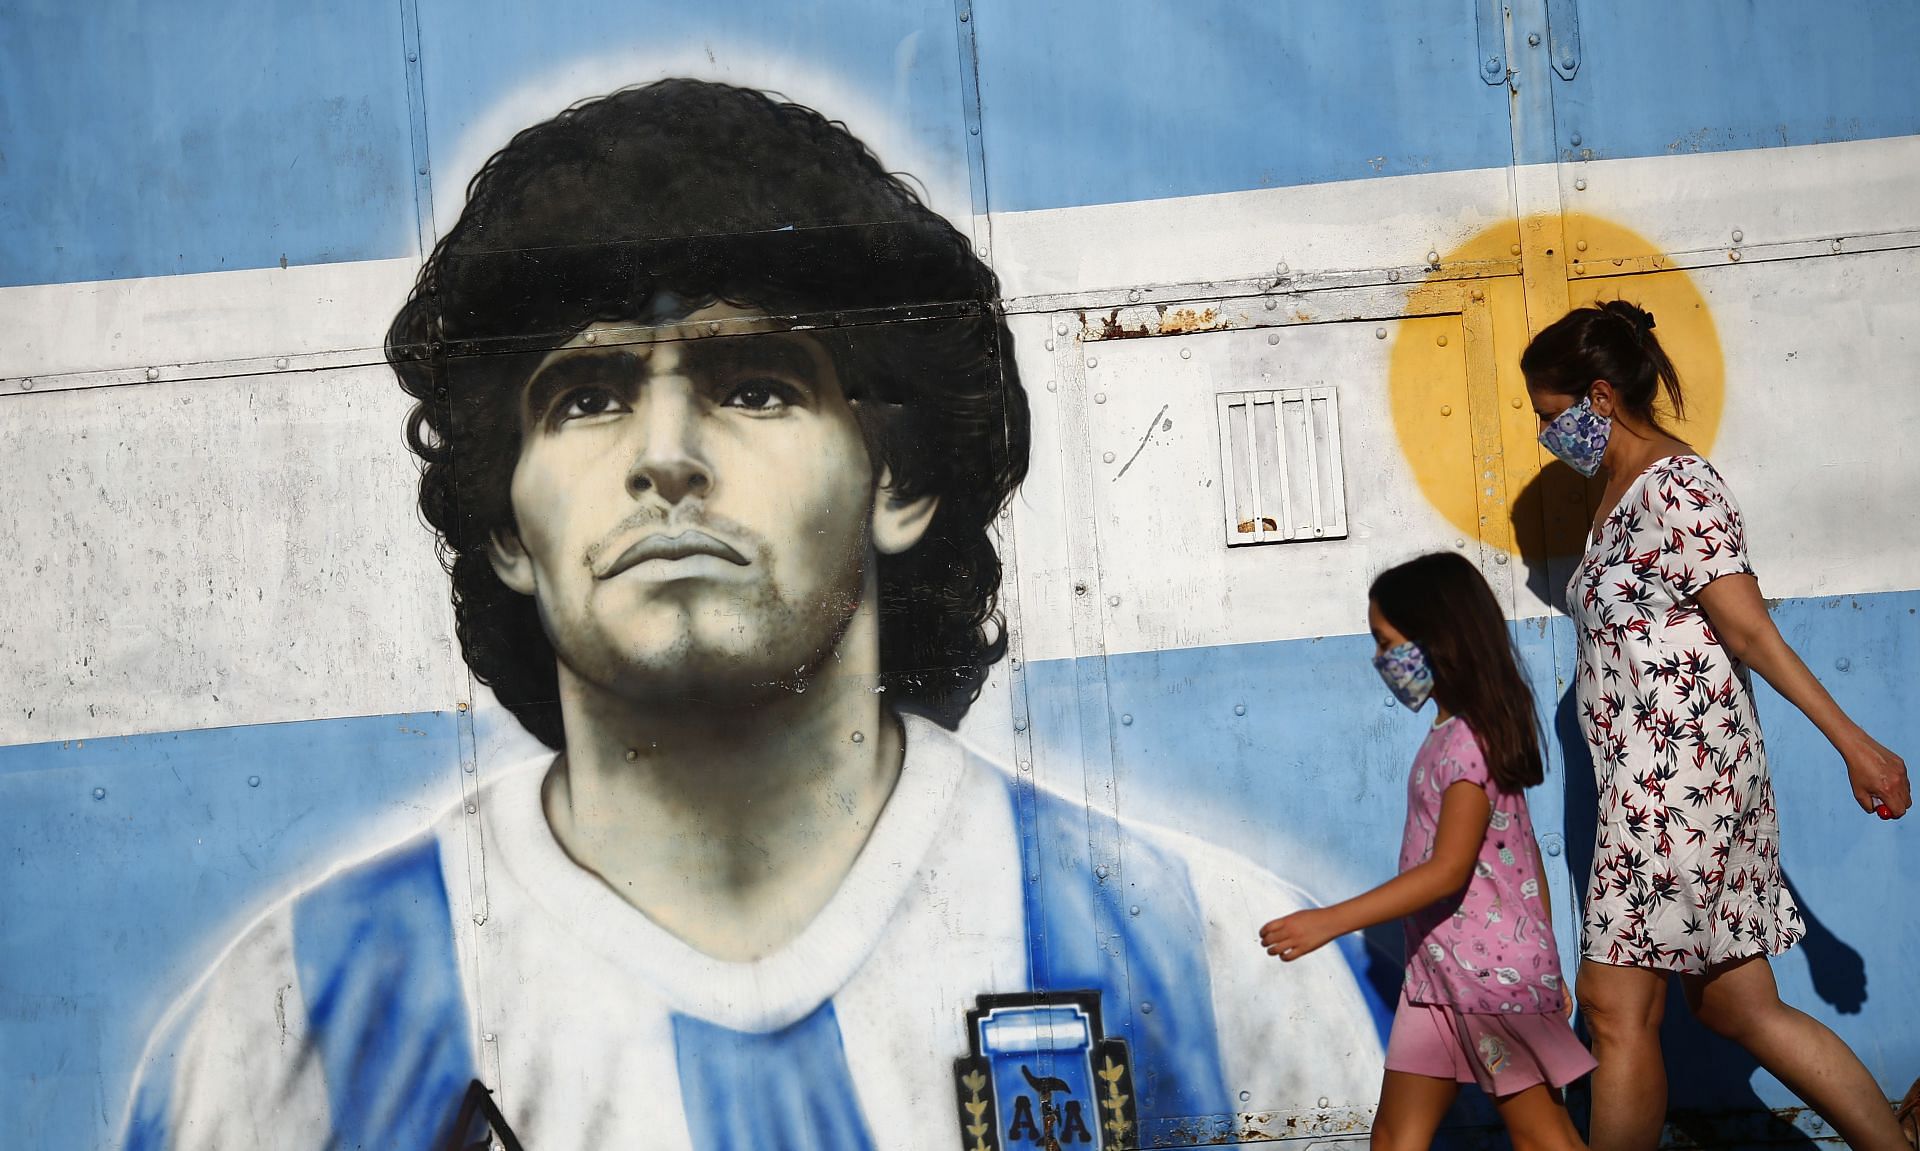 Maradona won the 1986 tournament with Argentina